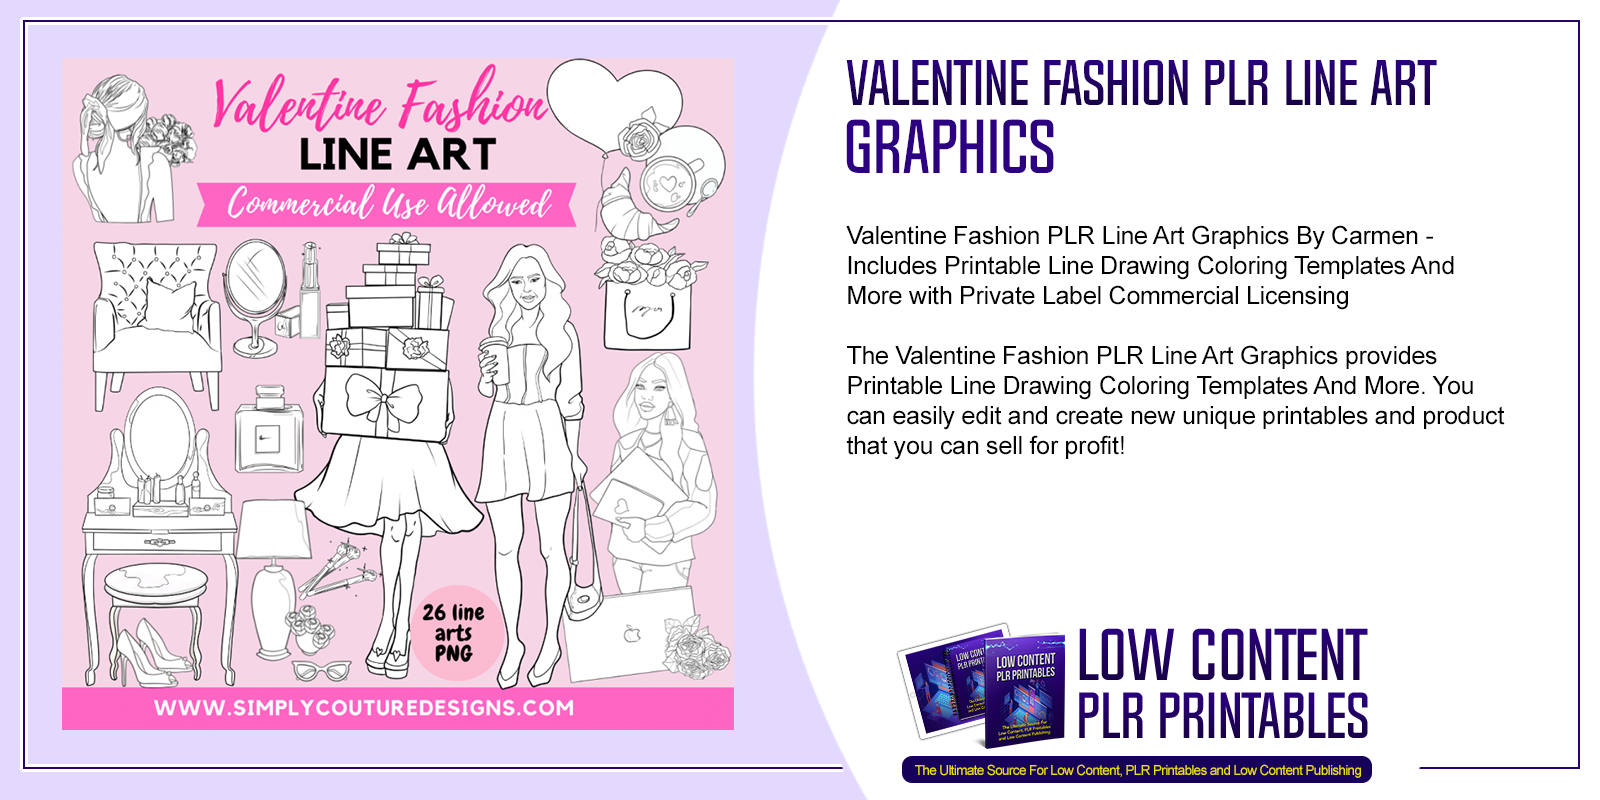 Valentine Fashion PLR Line Art Graphics